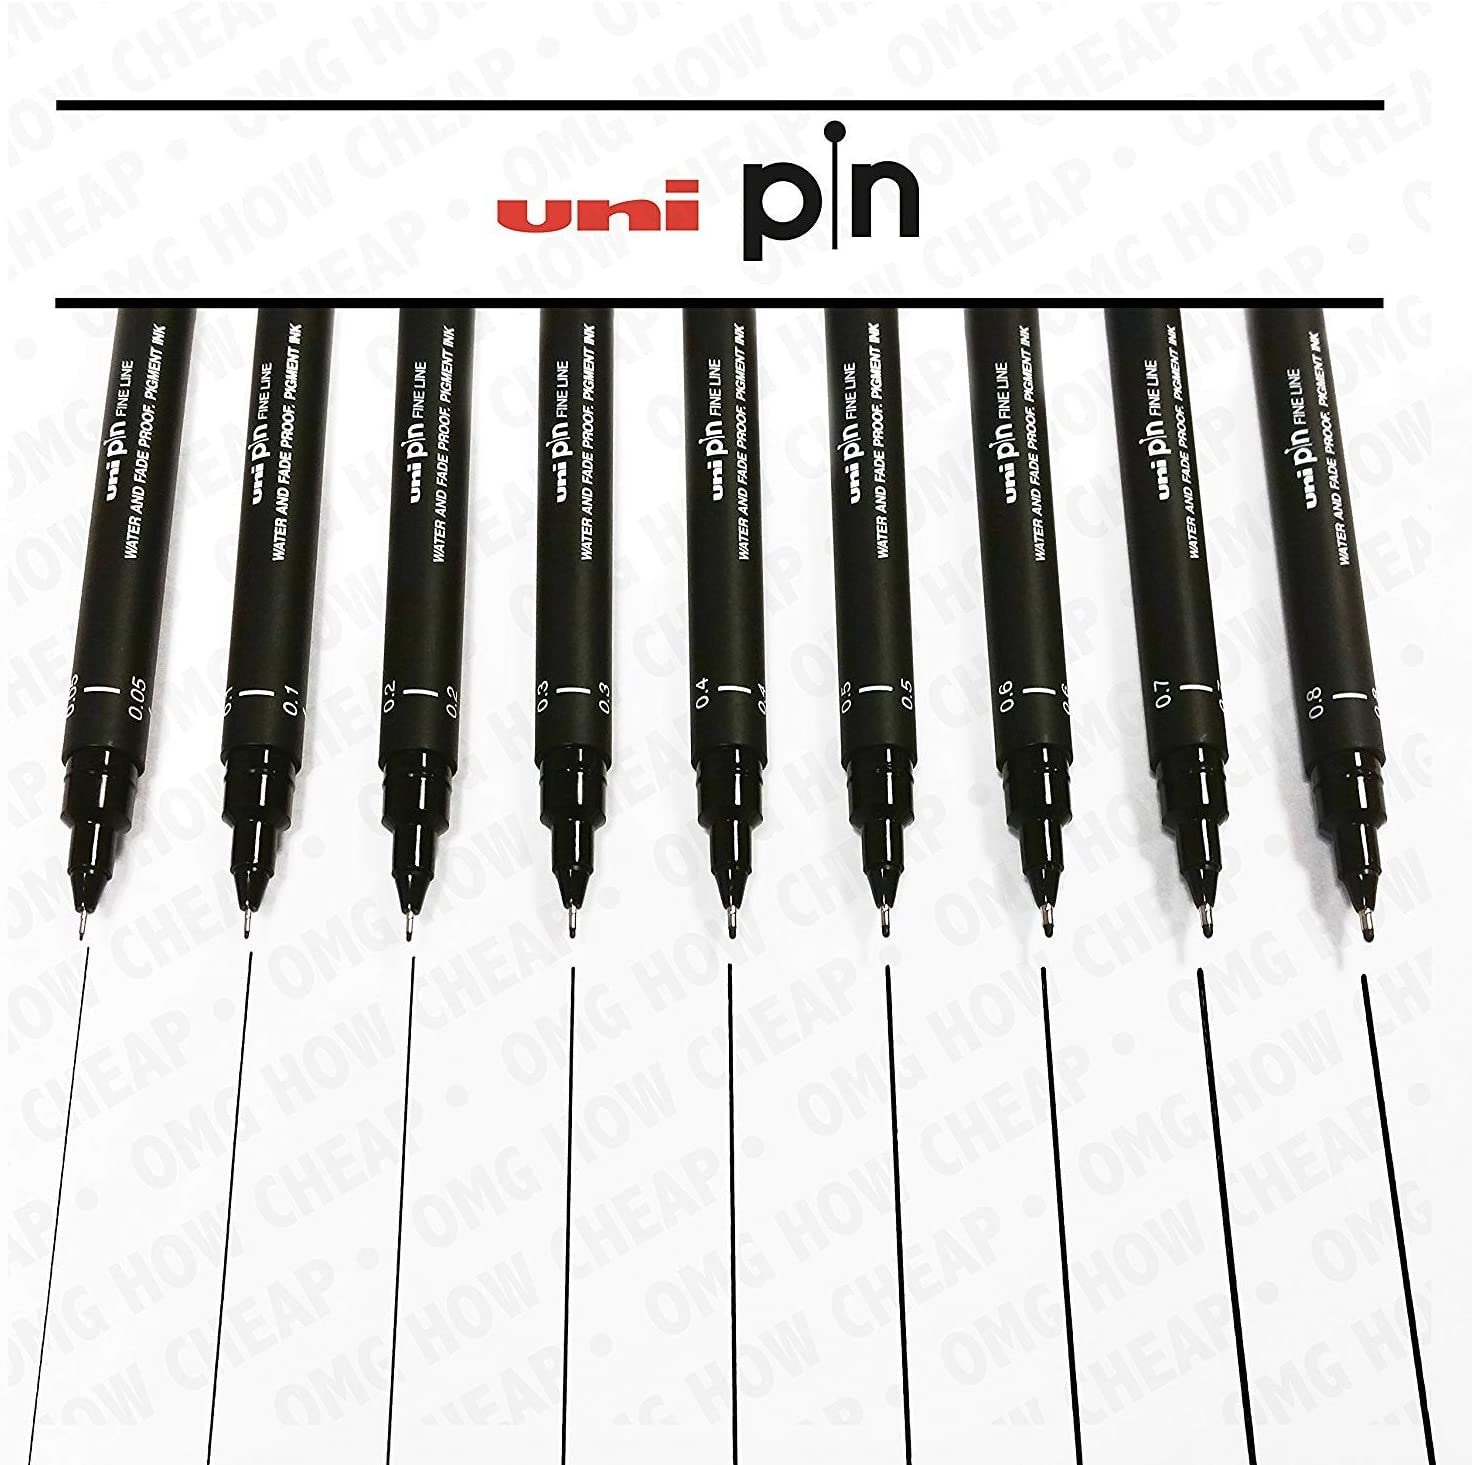 Uni Pin Fineliner Drawing Pen - Set of 8, 0.1mm - 0.8mm & Brush